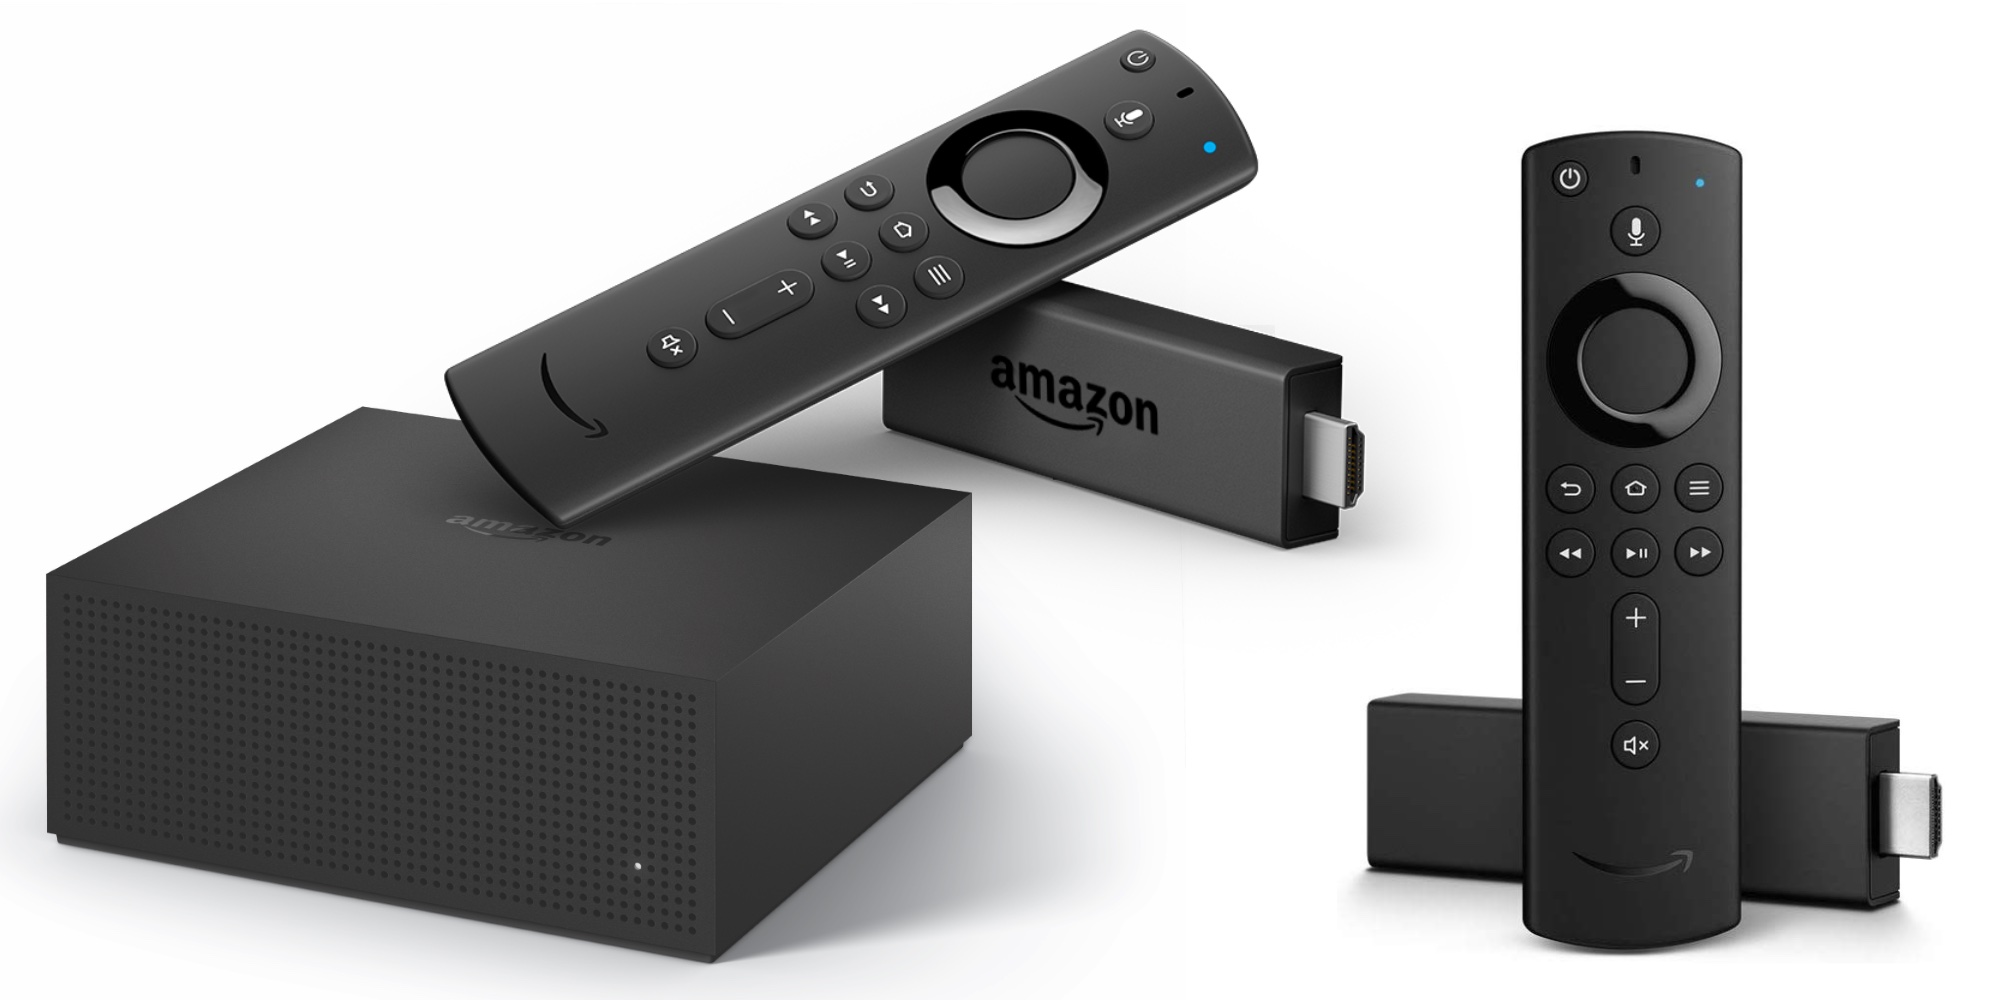 Amazon discounts Fire TV lineup: 4K Stick at $35, Recast $180, more